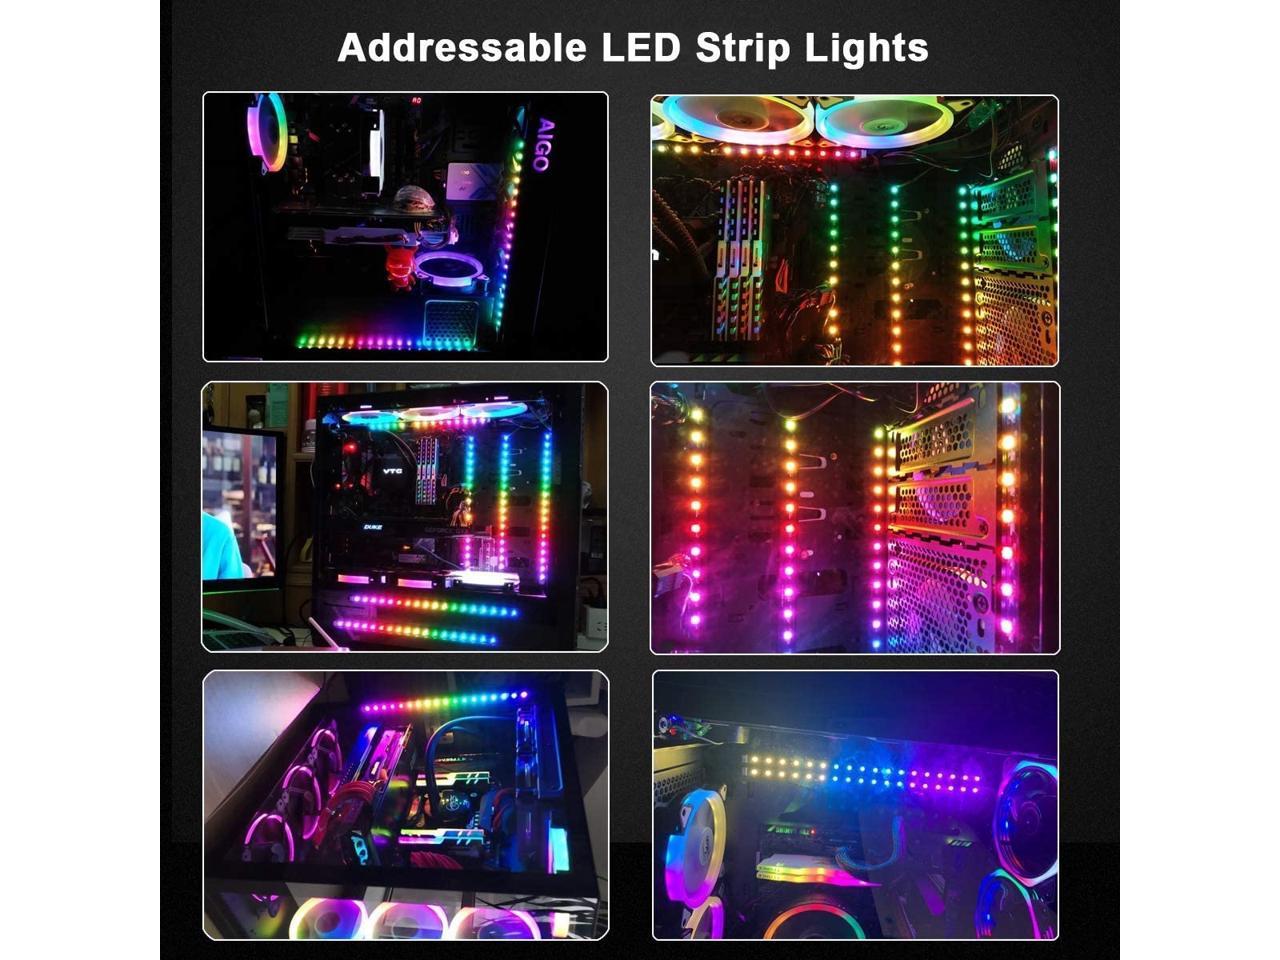 Addressable Pc Rgb Led Strip Magnetic Rainbow Pc Case Lighting 2pcs